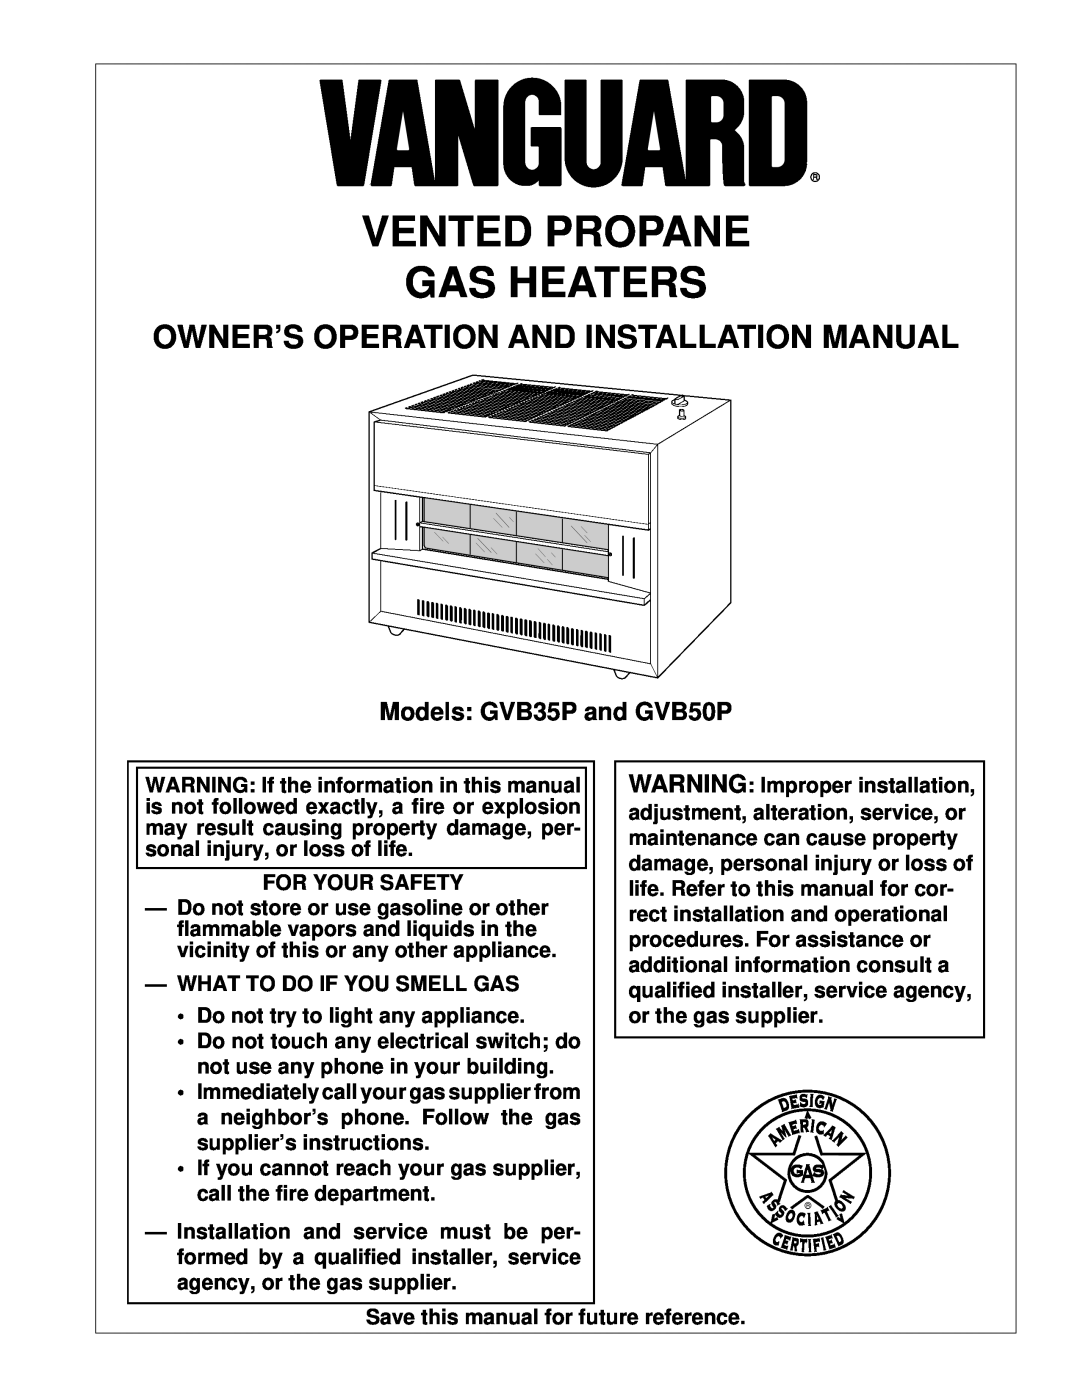 Vanguard Heating GVB35P, GVB50P installation manual Owner’S Operation And Installation Manual, Vented Propane Gas Heaters 